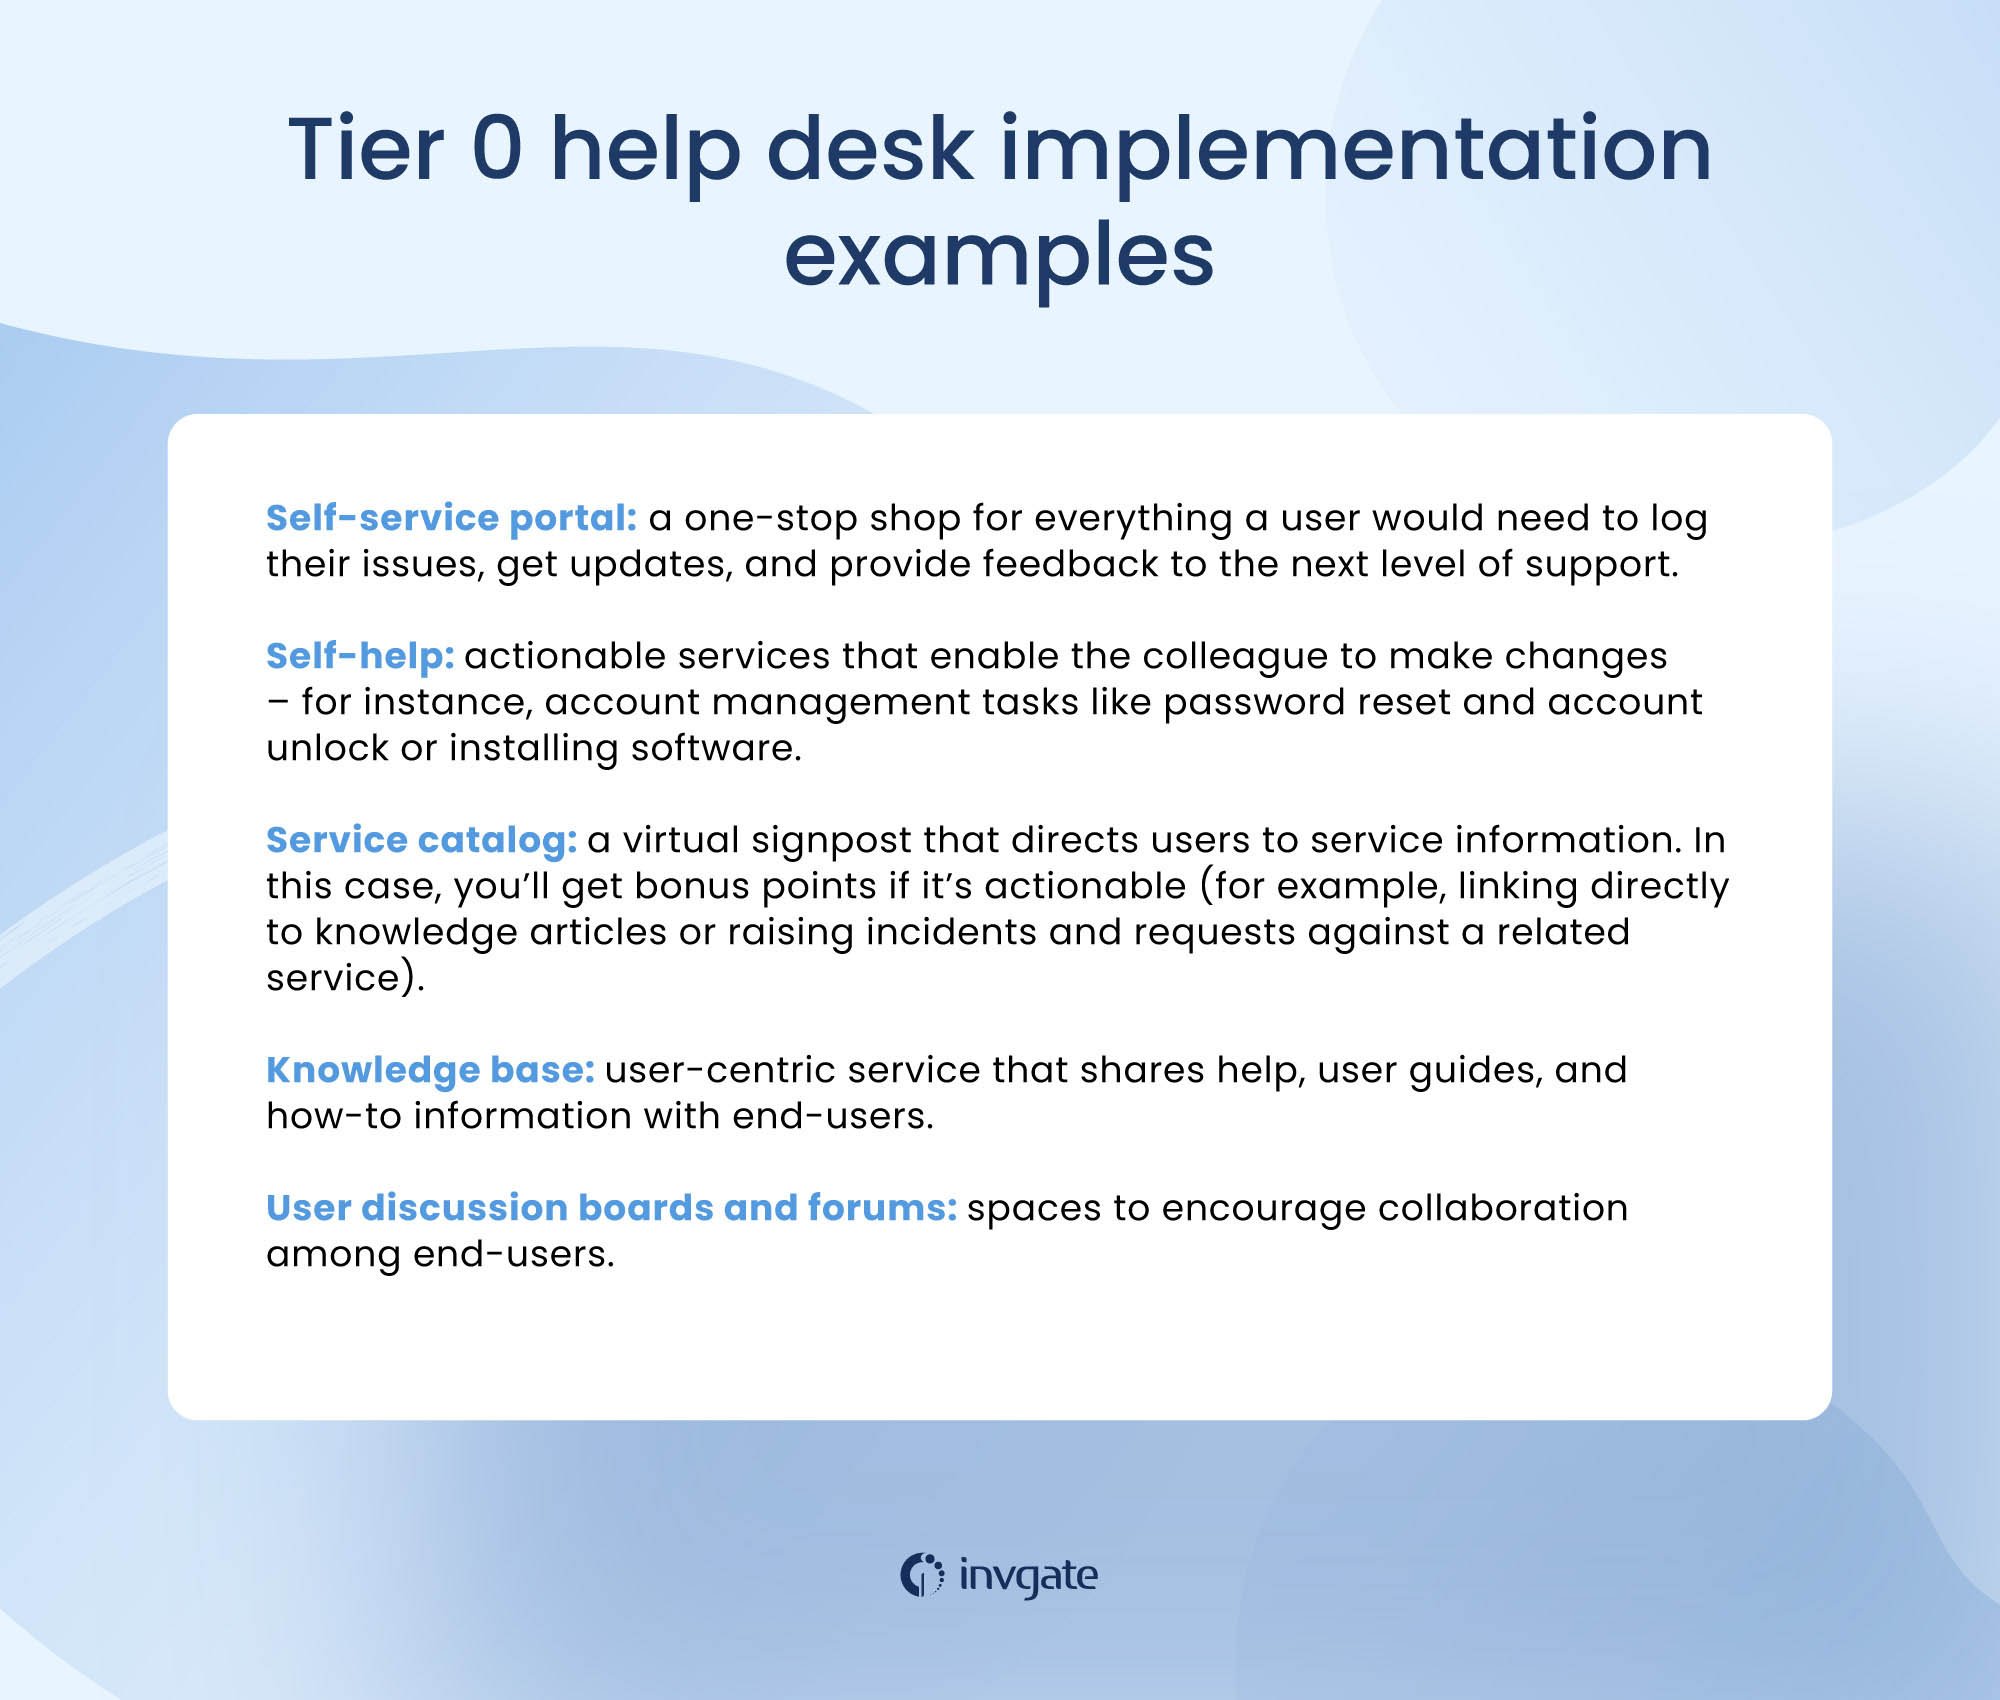 Tier 0 help desk implementation examples.